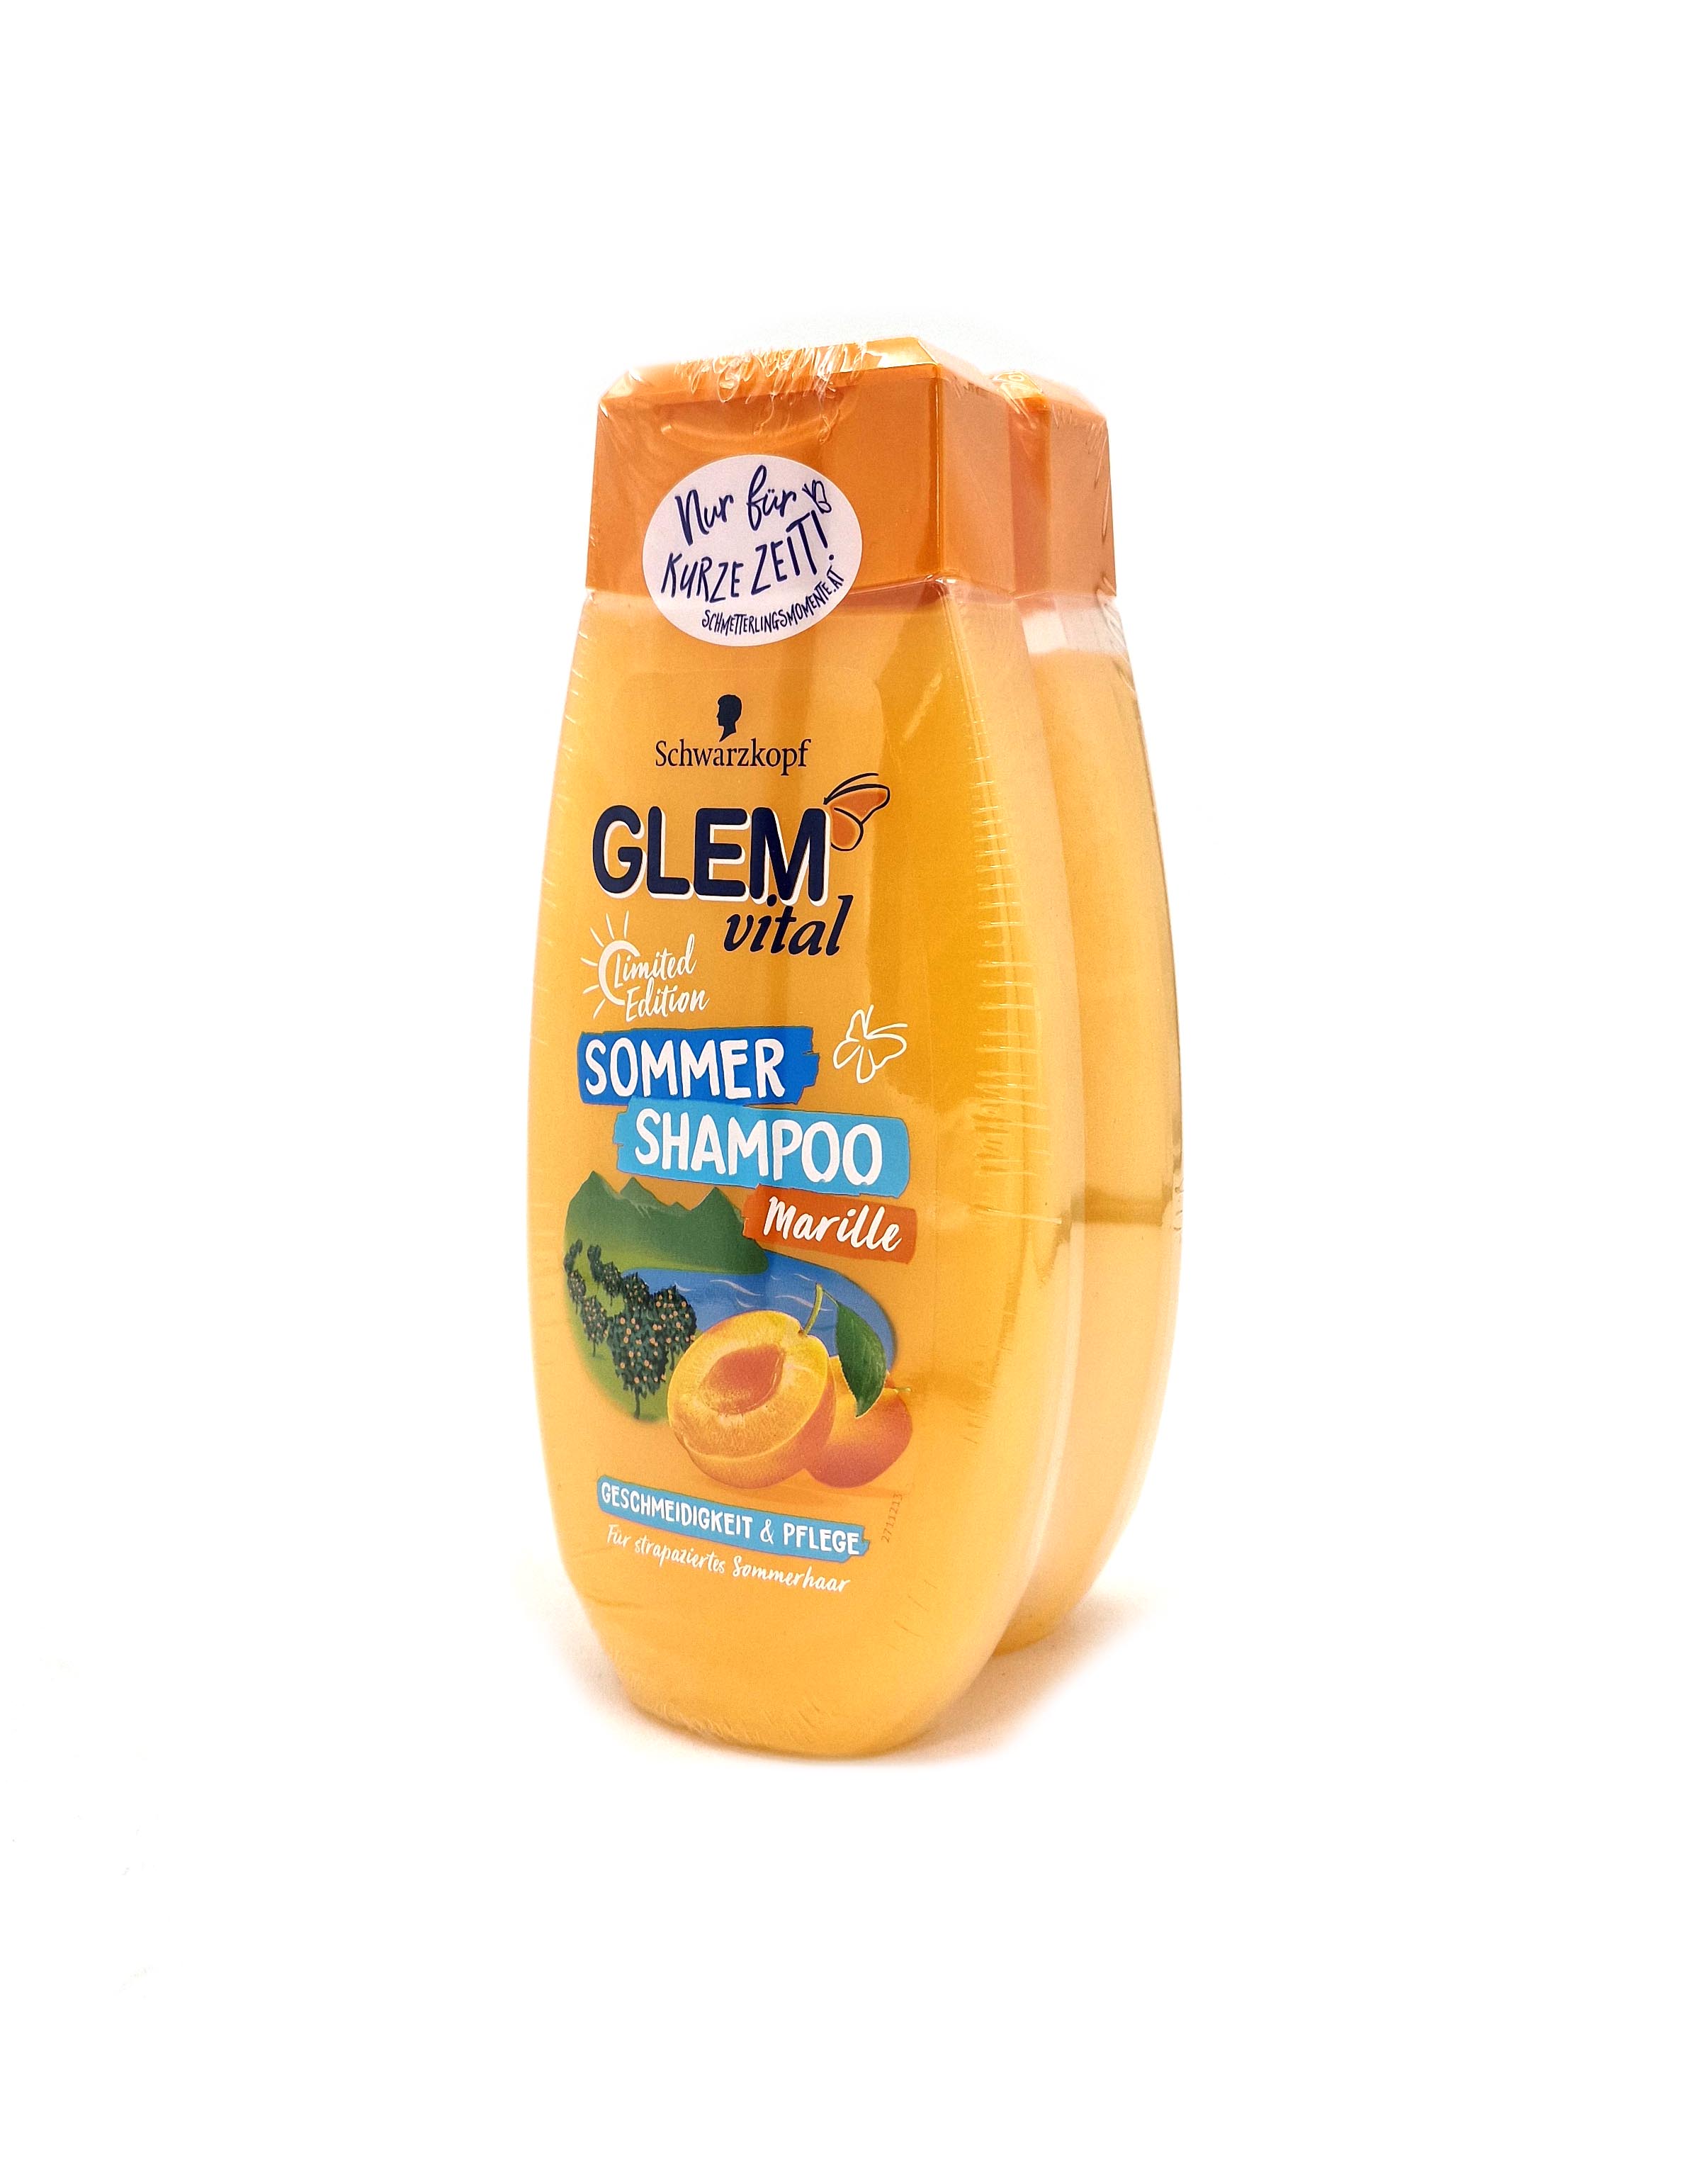 Glem Vital Shampoo Duo Pack 2x350ml Marille